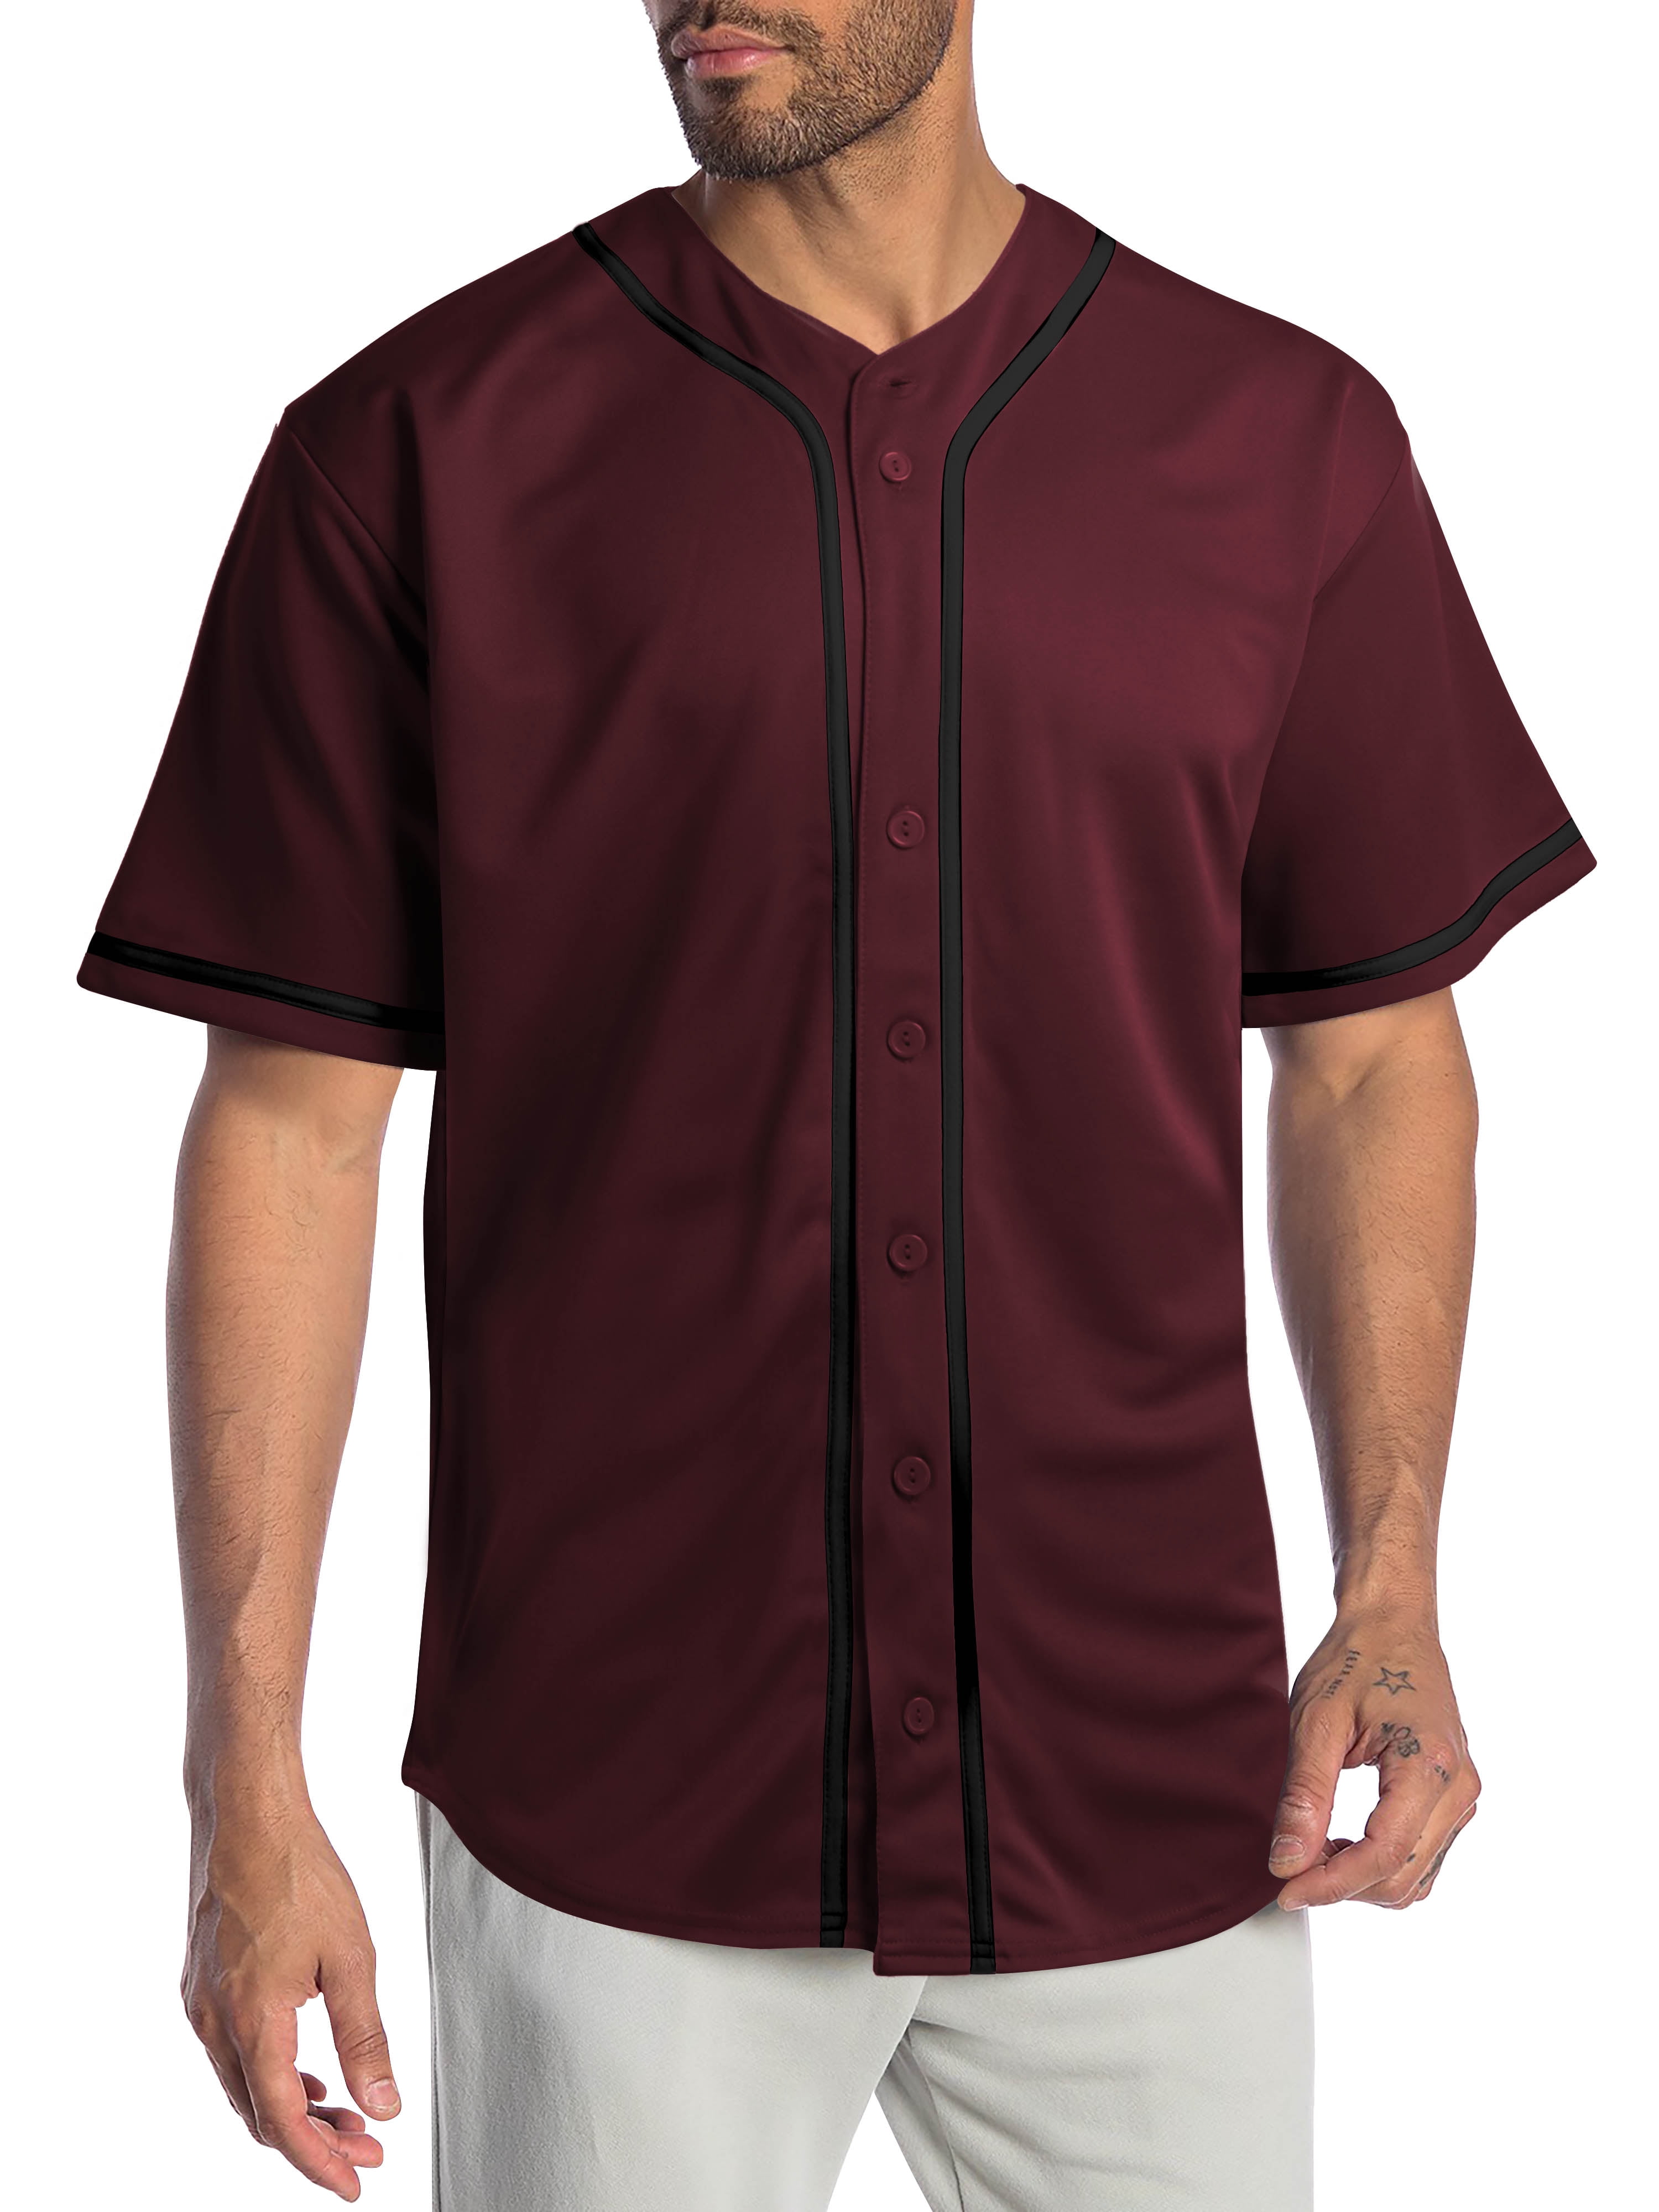 Baseball Jersey T-Shirts Plain Button Down Sports Tee